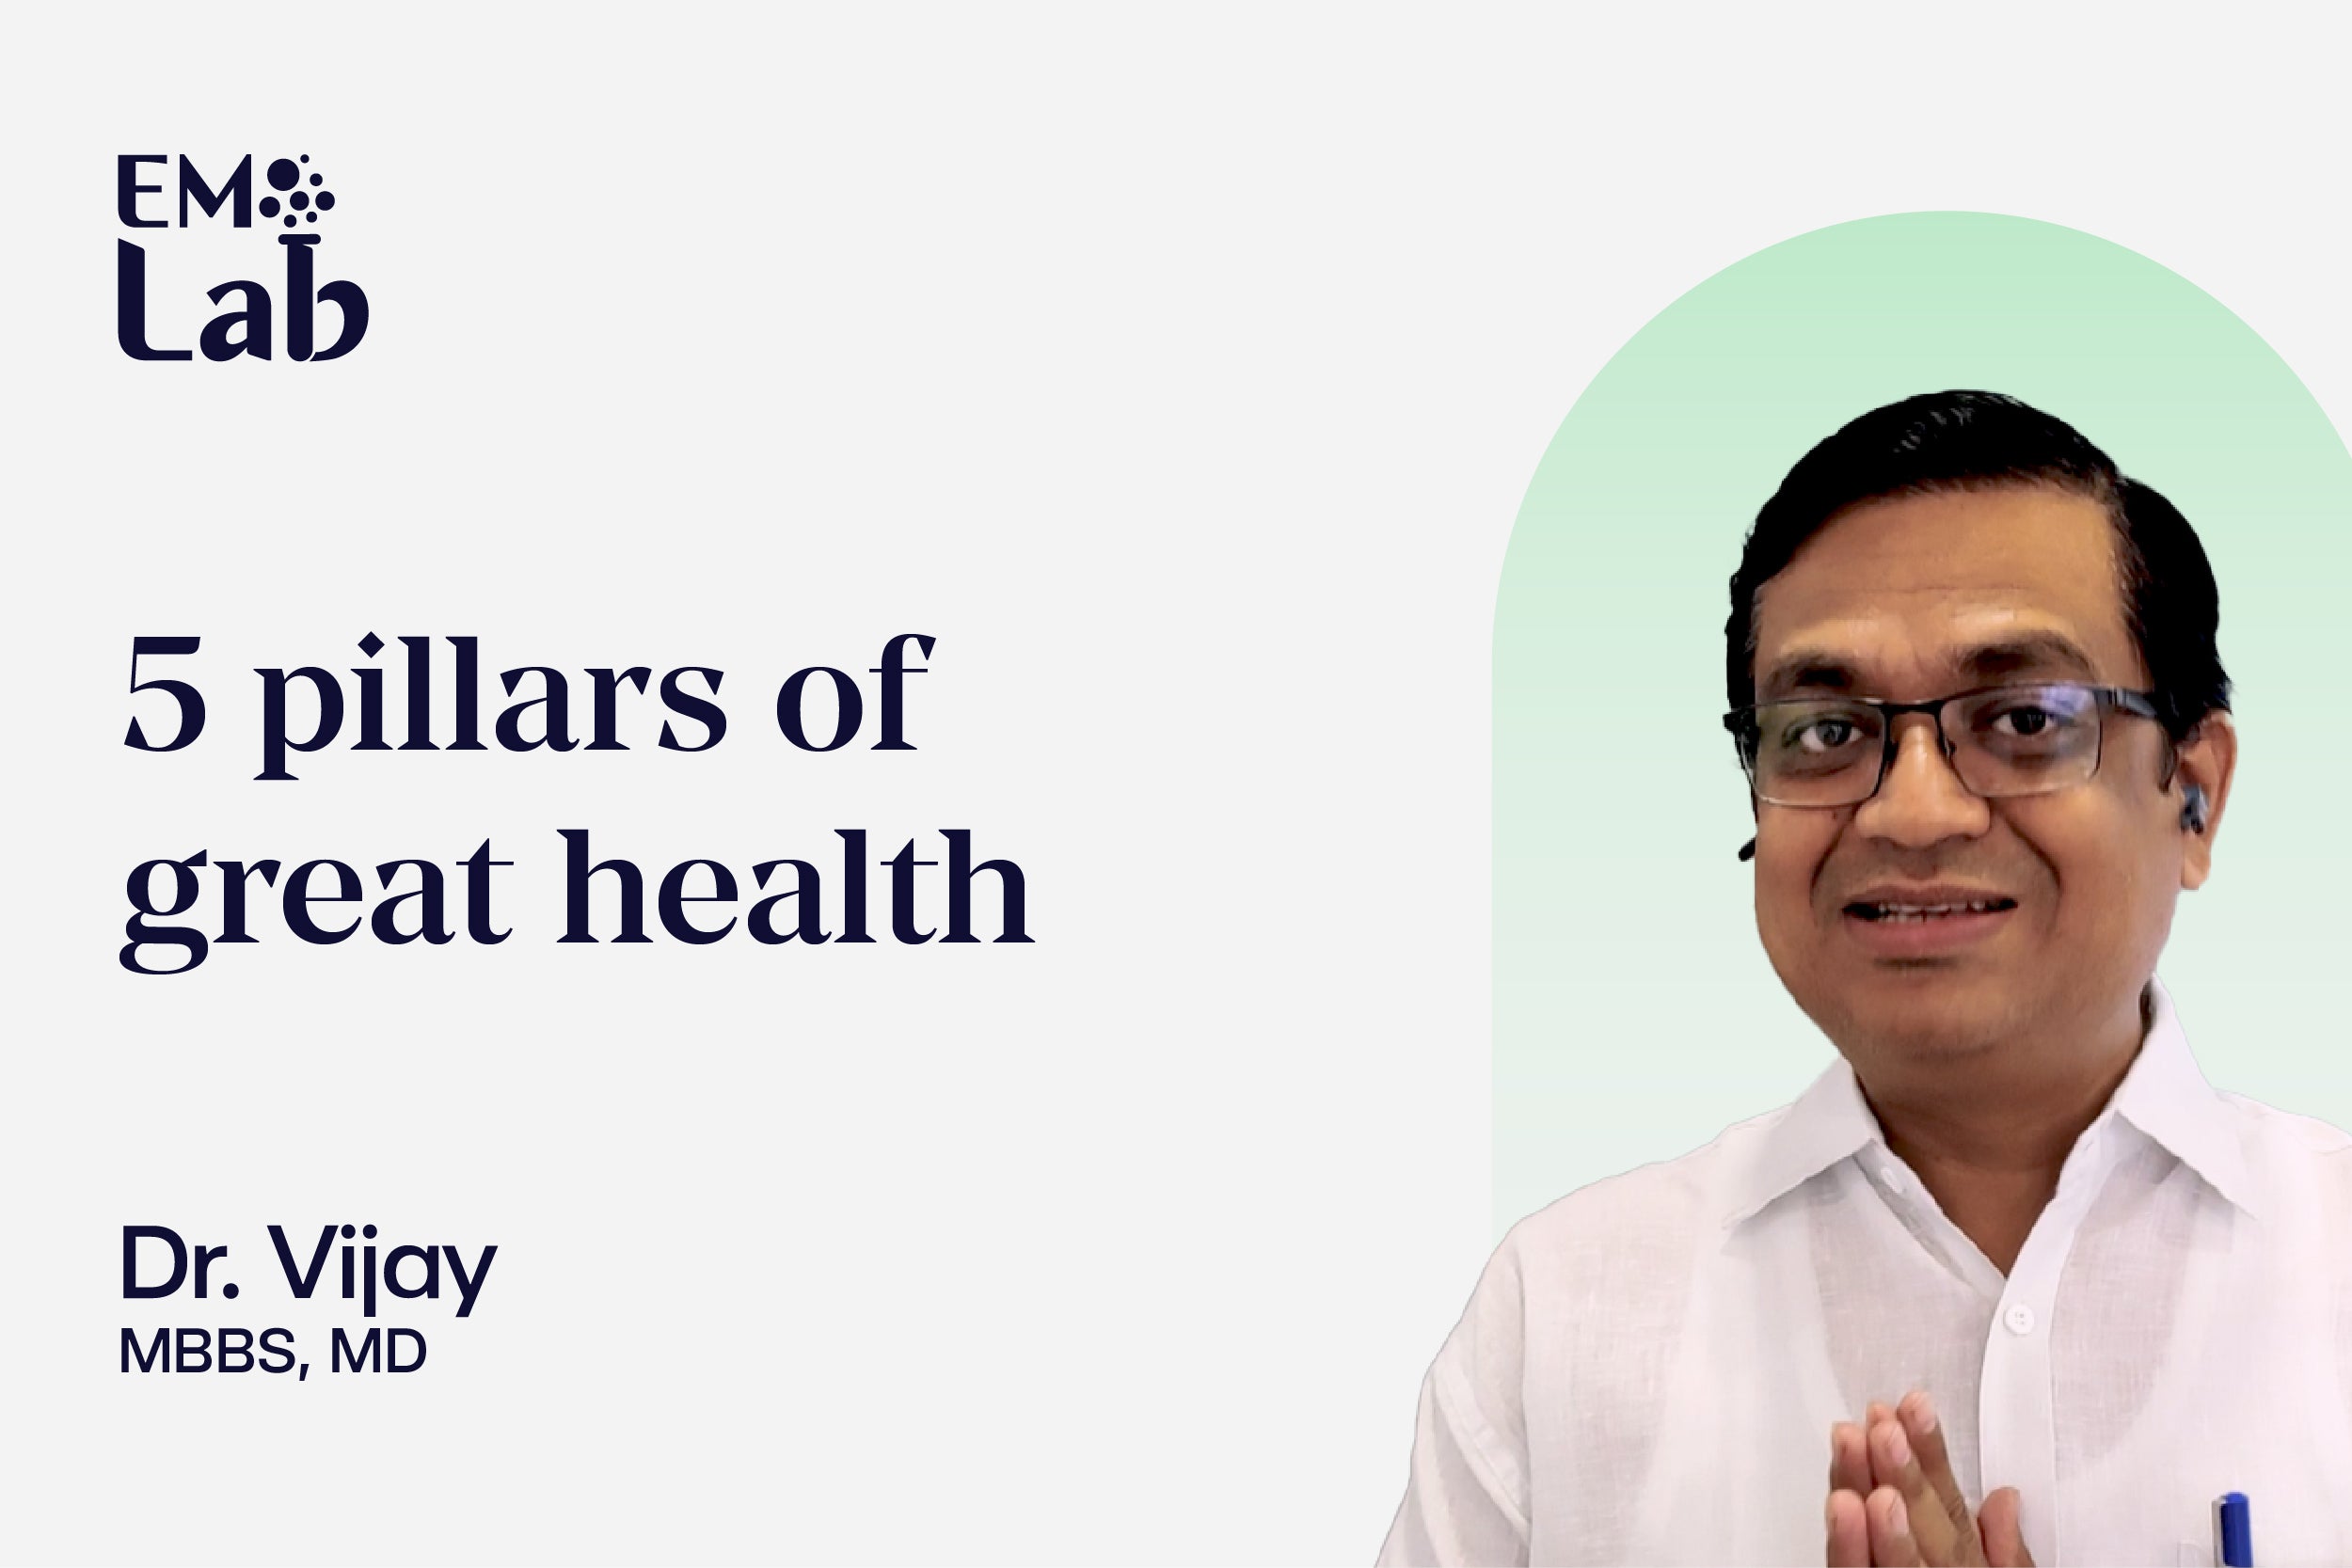 5 pillars of great health